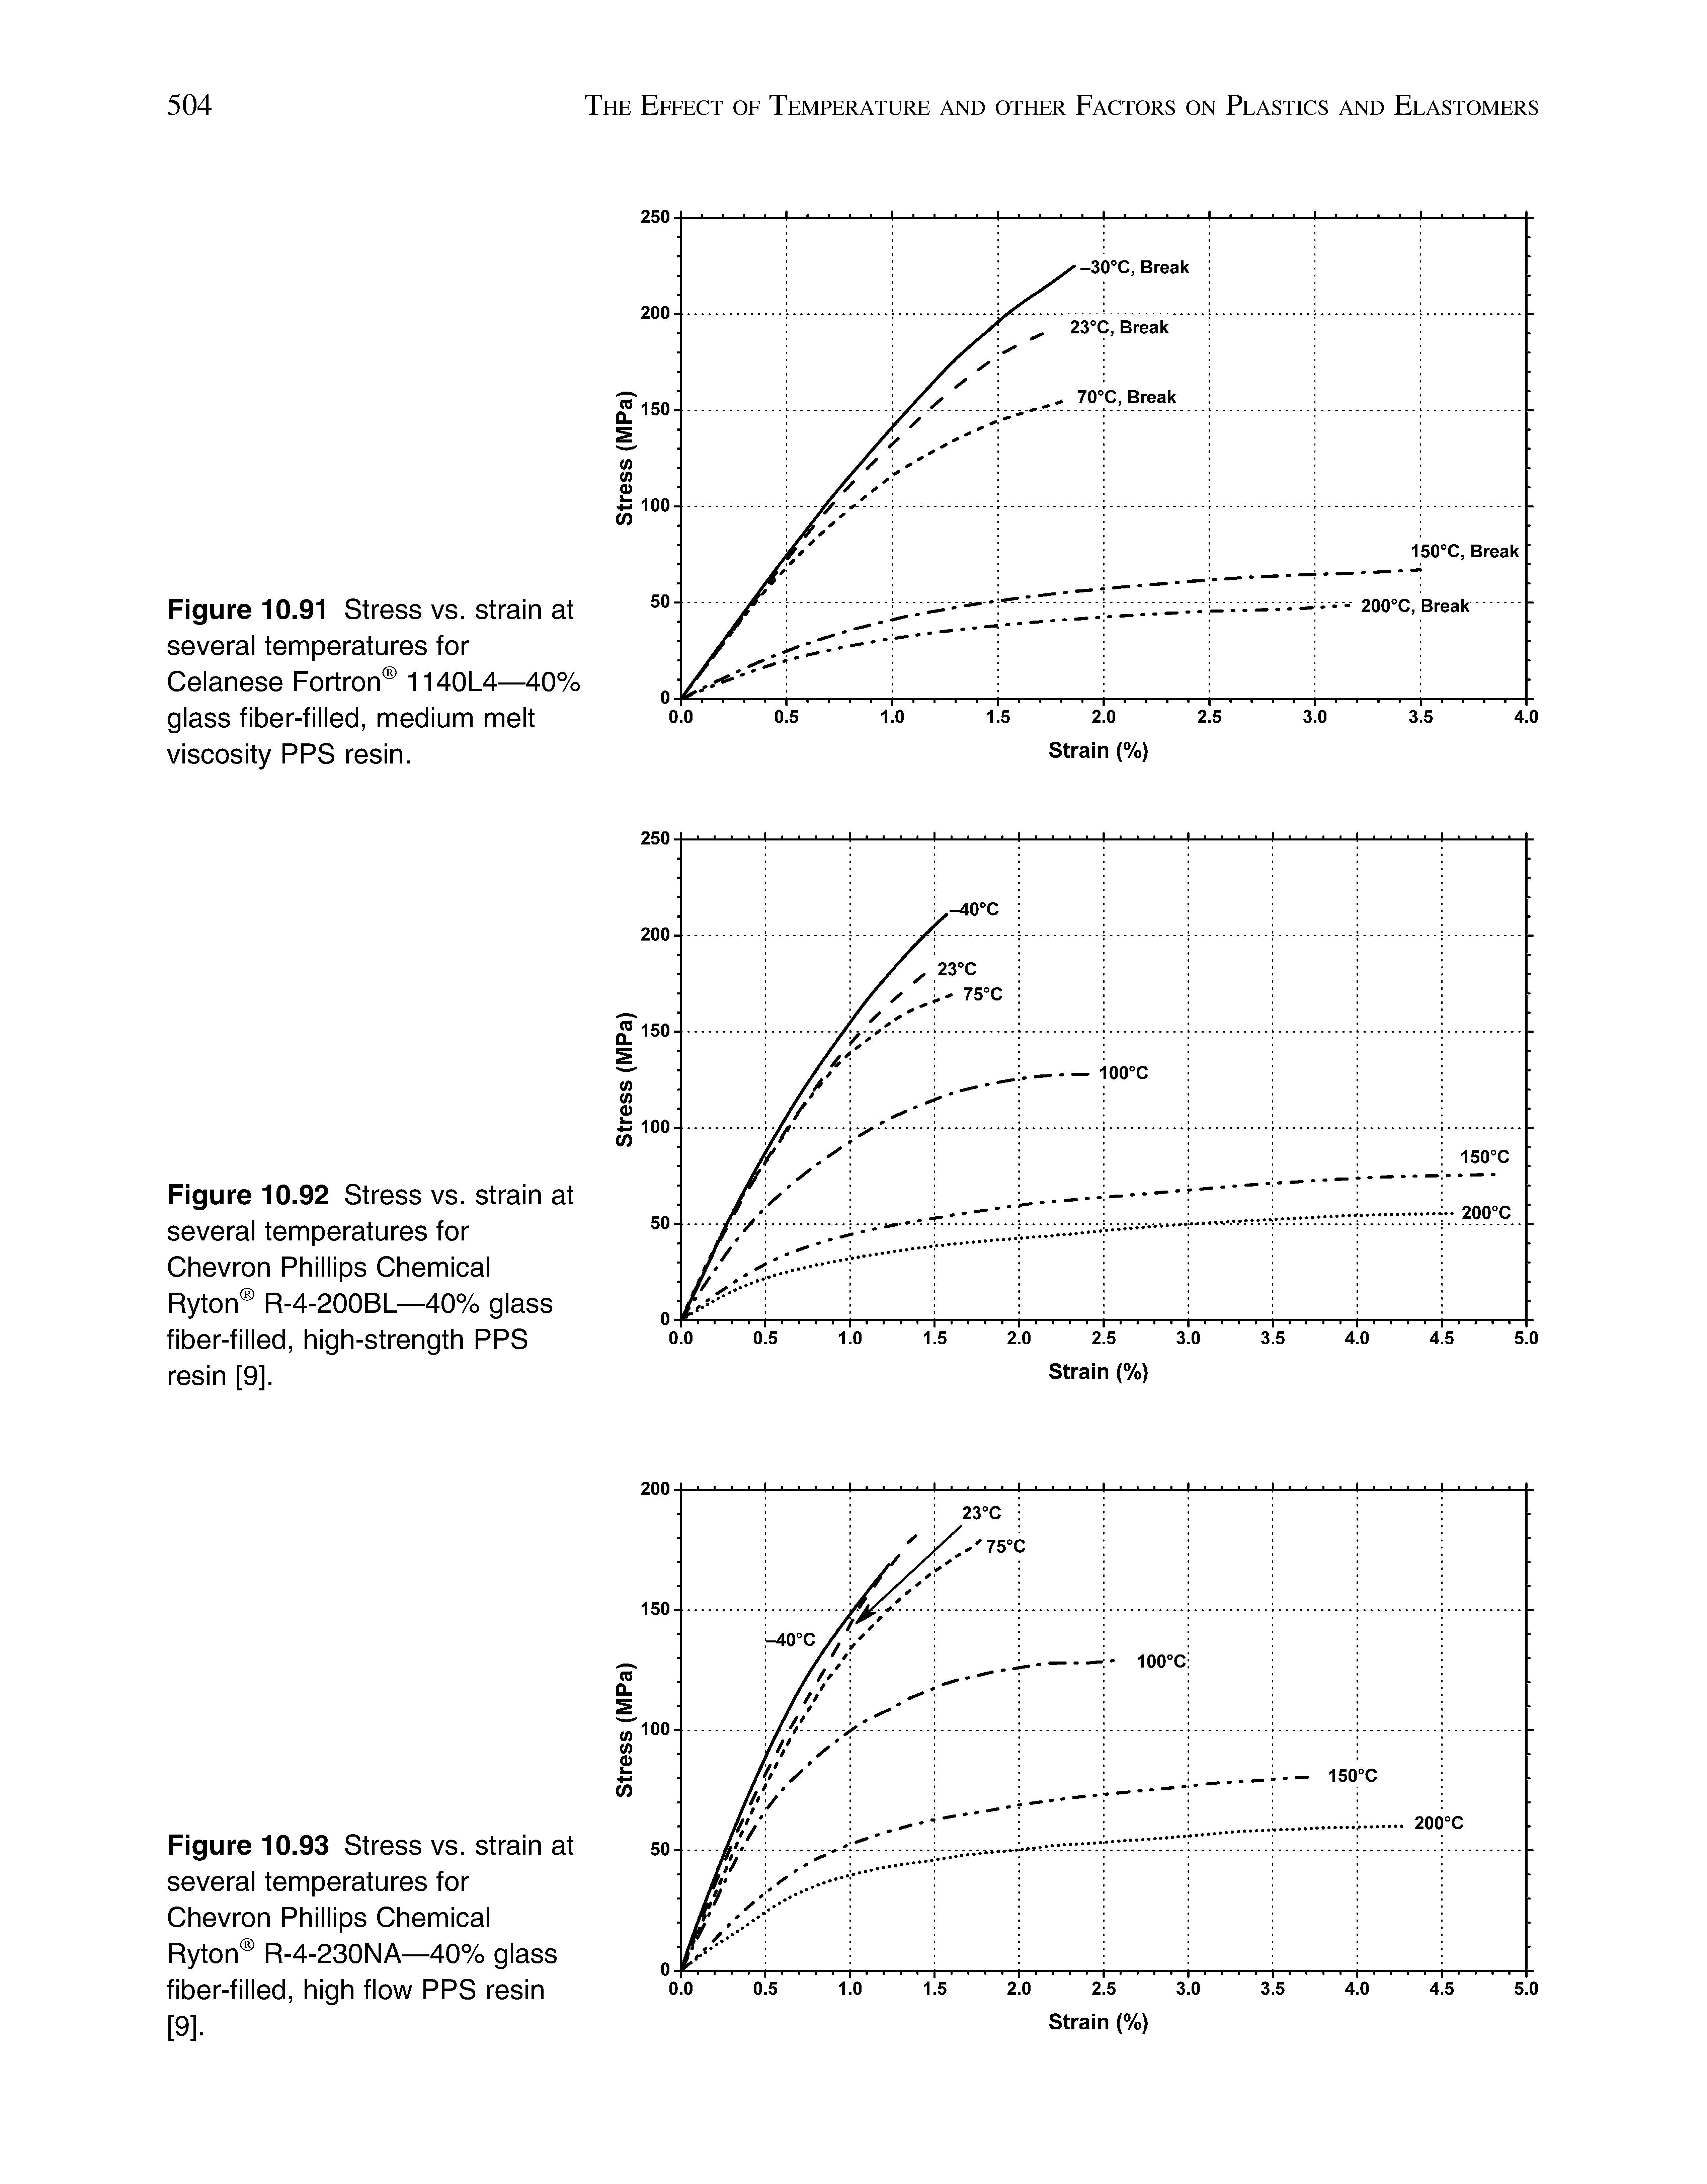 Figure 10.91 Stress vs. strain at several temperatures for Celanese Fortron 1140L4—40% glass fiber-filled, medium melt viscosity PPS resin.